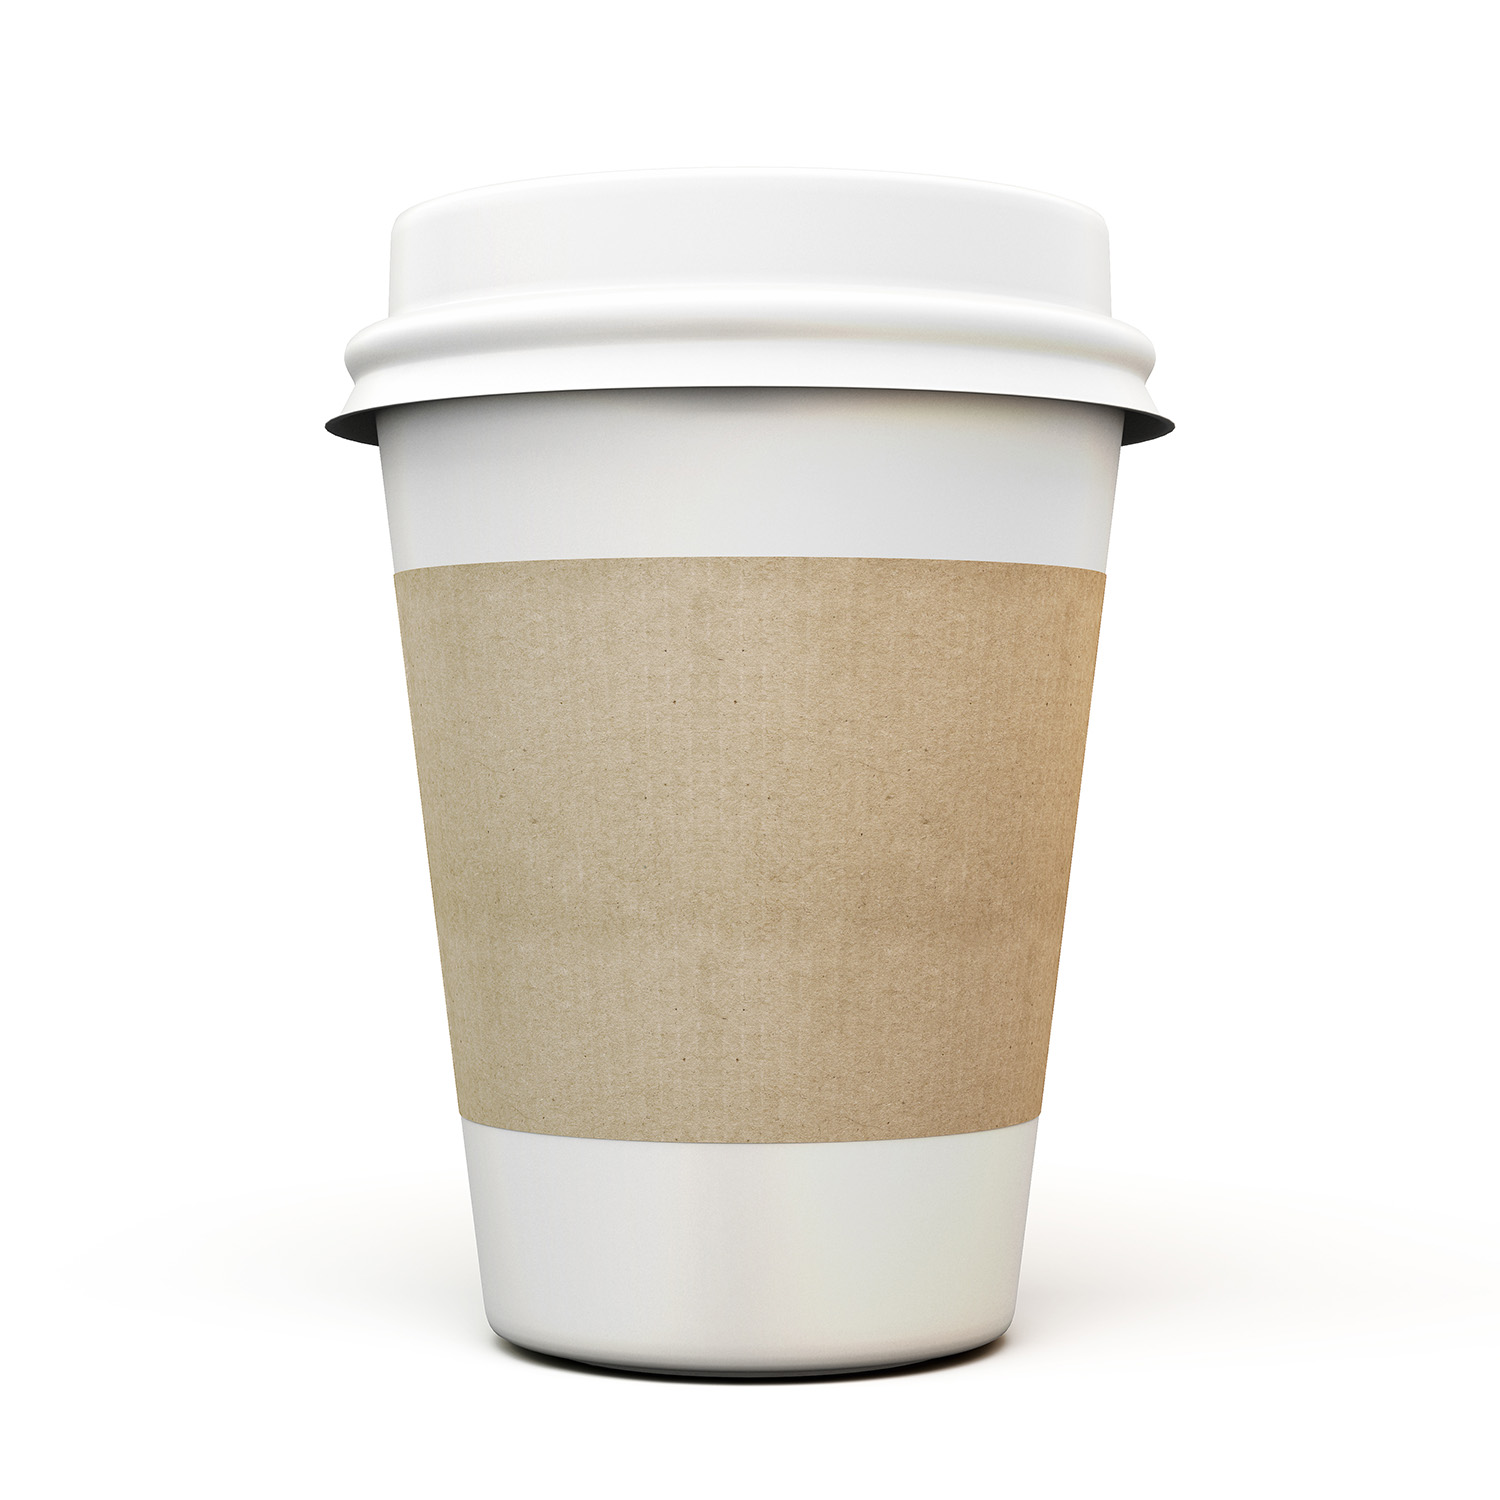 https://zerowaste.ucsf.edu/data/images/paper/coffee_cups/Coffee%20cup.jpg